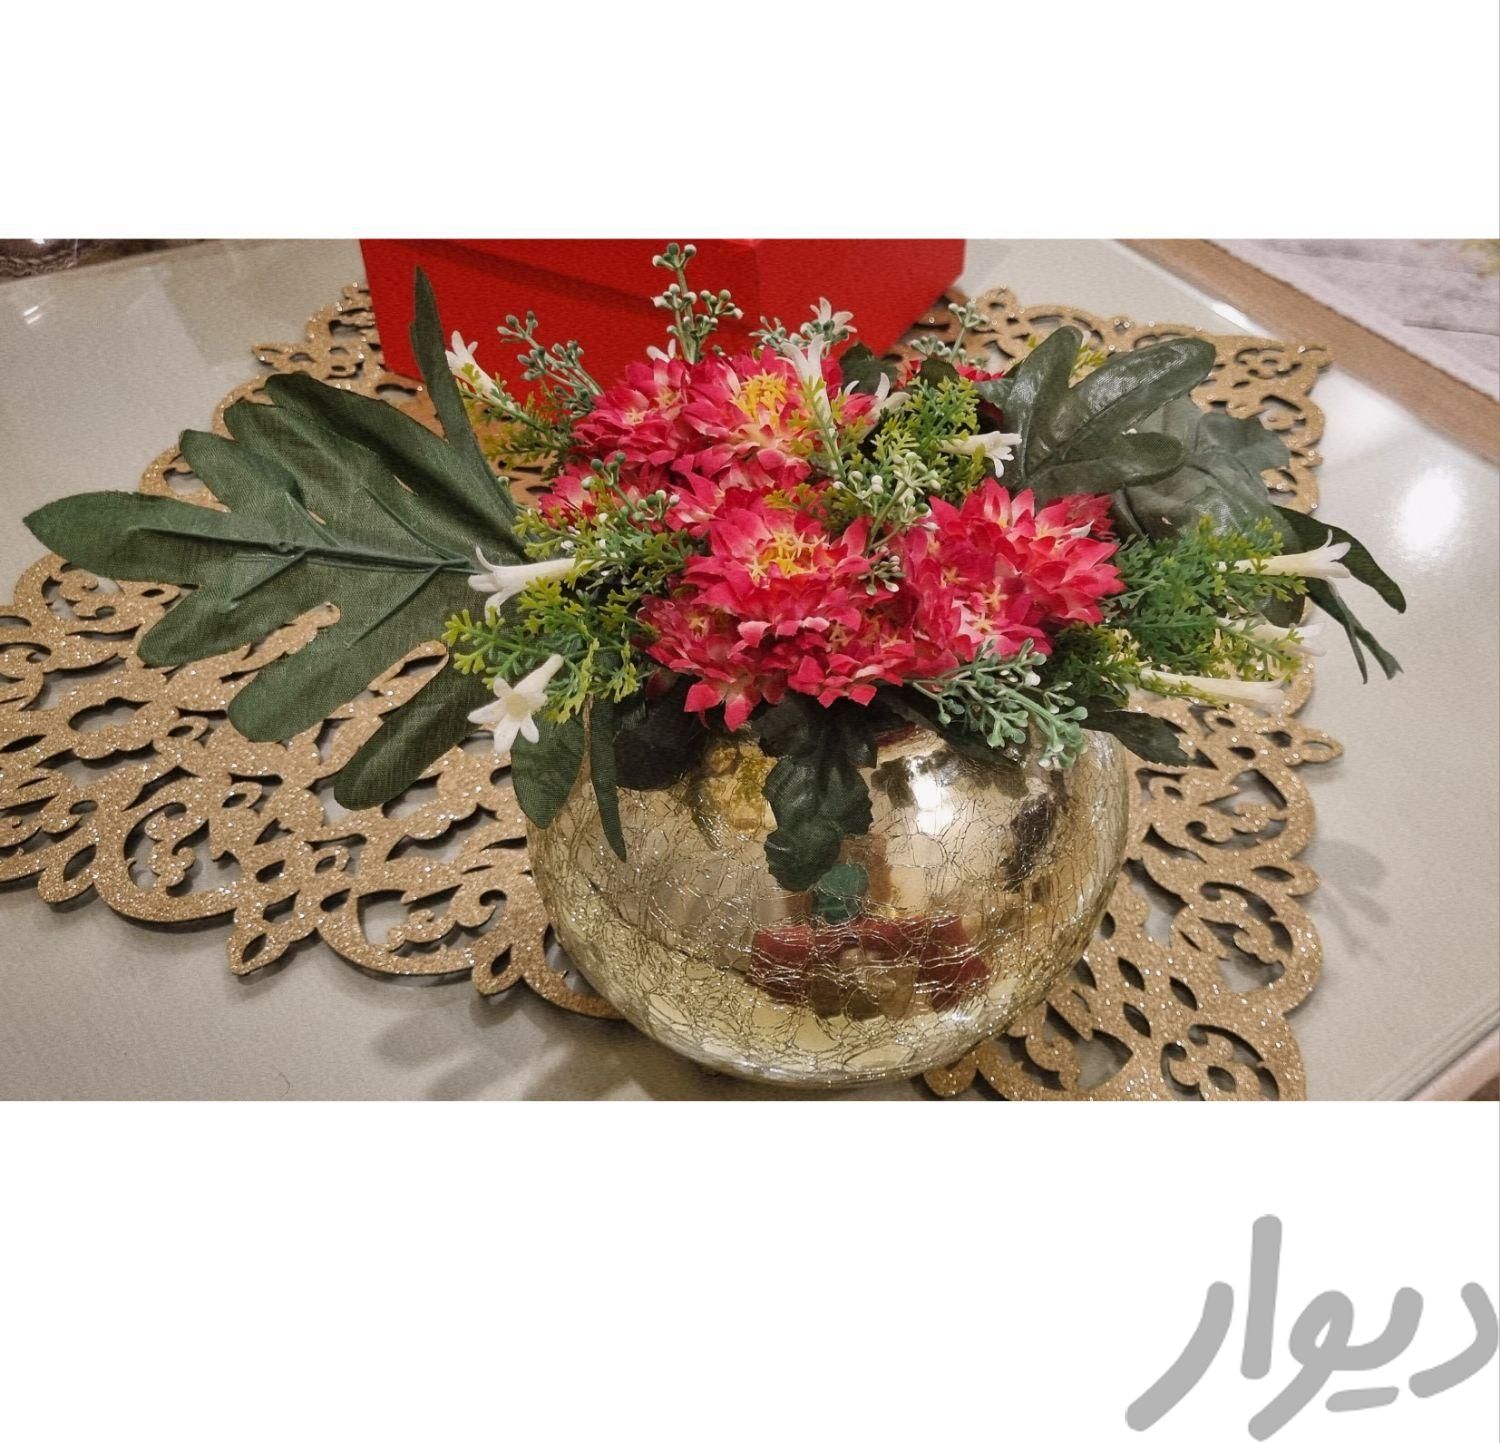 گل مصنوعی و گلدان طلایی شیک|گل مصنوعی|تهران, سرو آزاد|دیوار